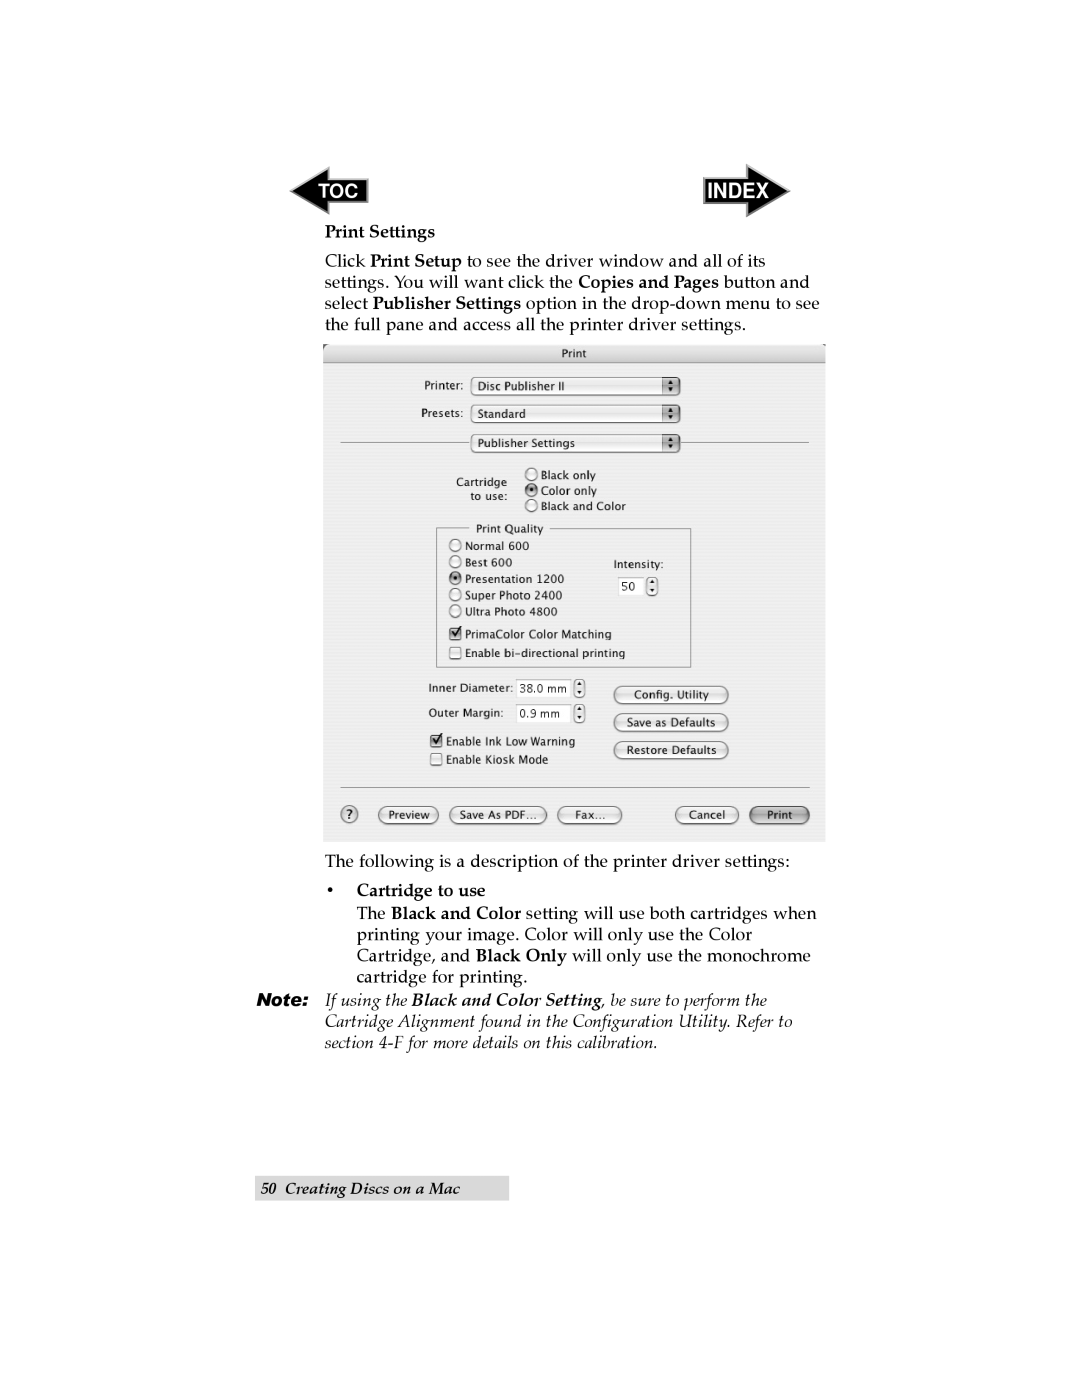 Primera Technology II user manual Index, Print Settings, Cartridge to use, Creating Discs on a Mac 